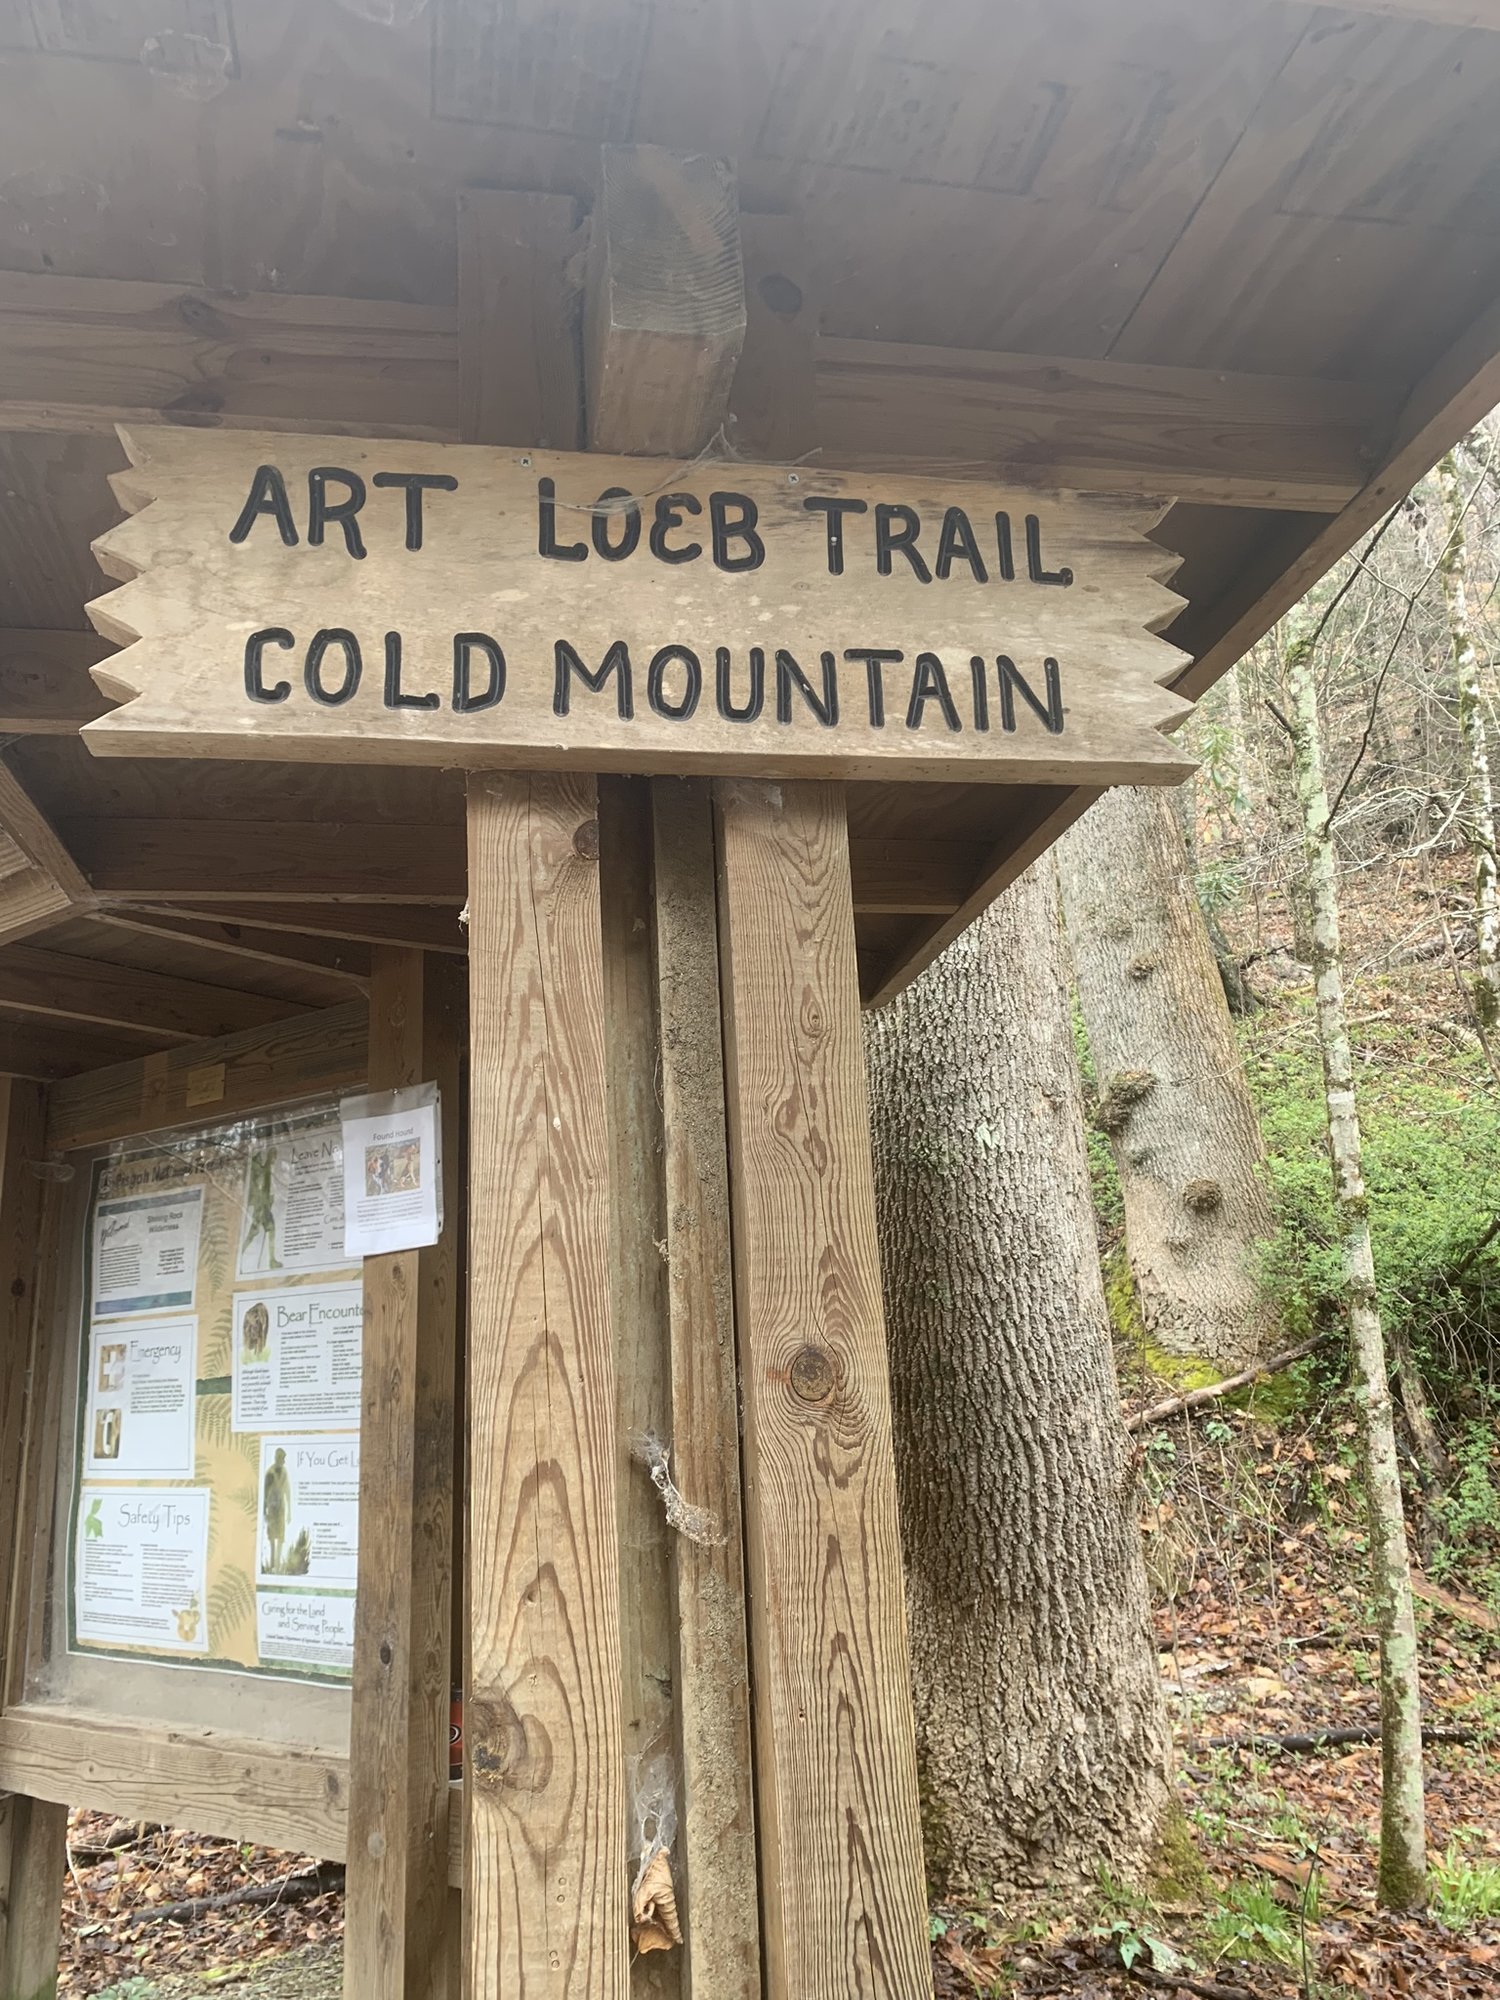 The Daniel Boone terminus of the Art Loeb Trail